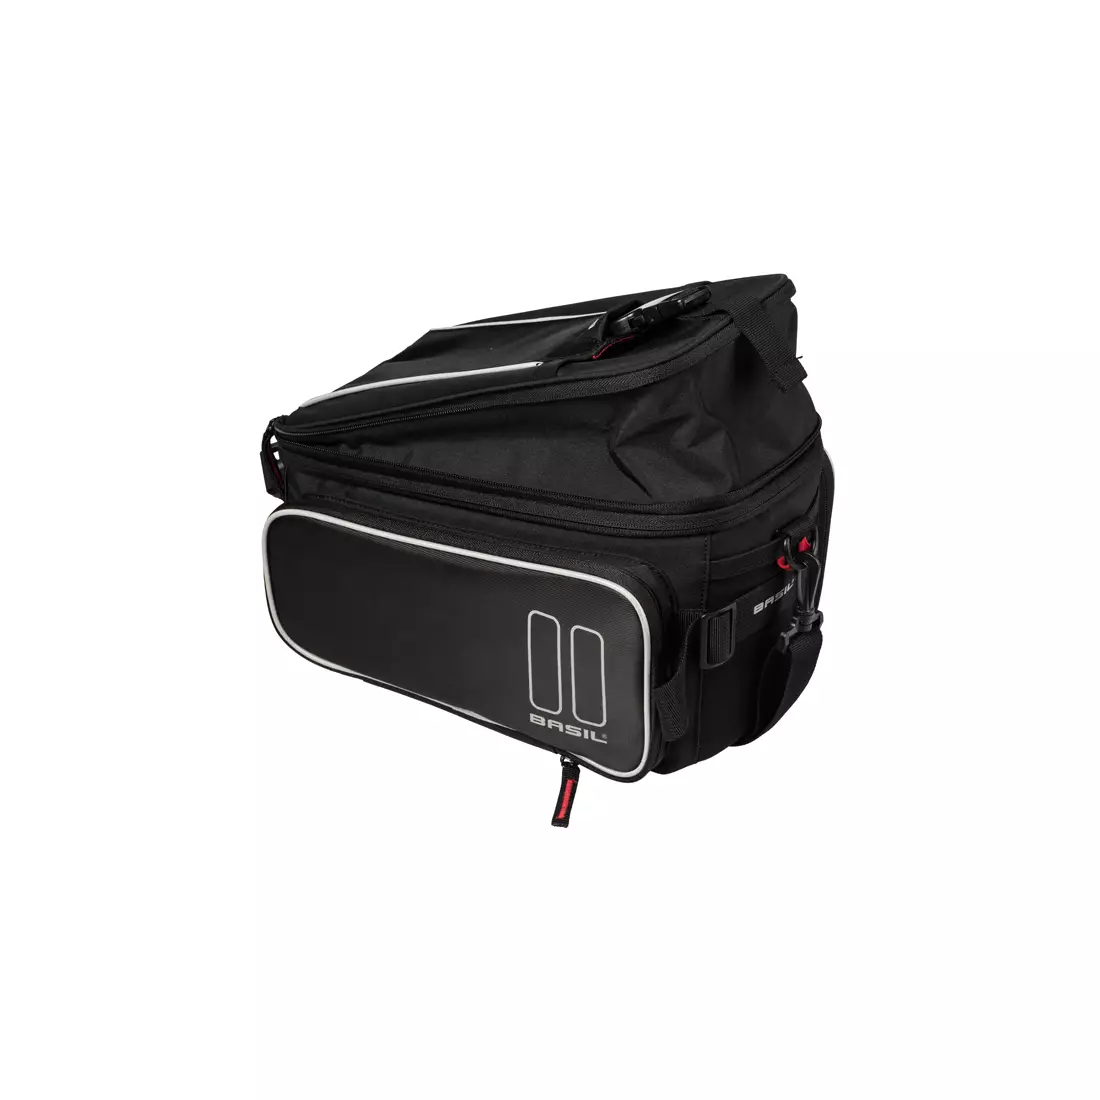 BASIL SPORT DESIGN TRUNKBAG 7-12L, Waterproof bicycle bag, black BAS-17746